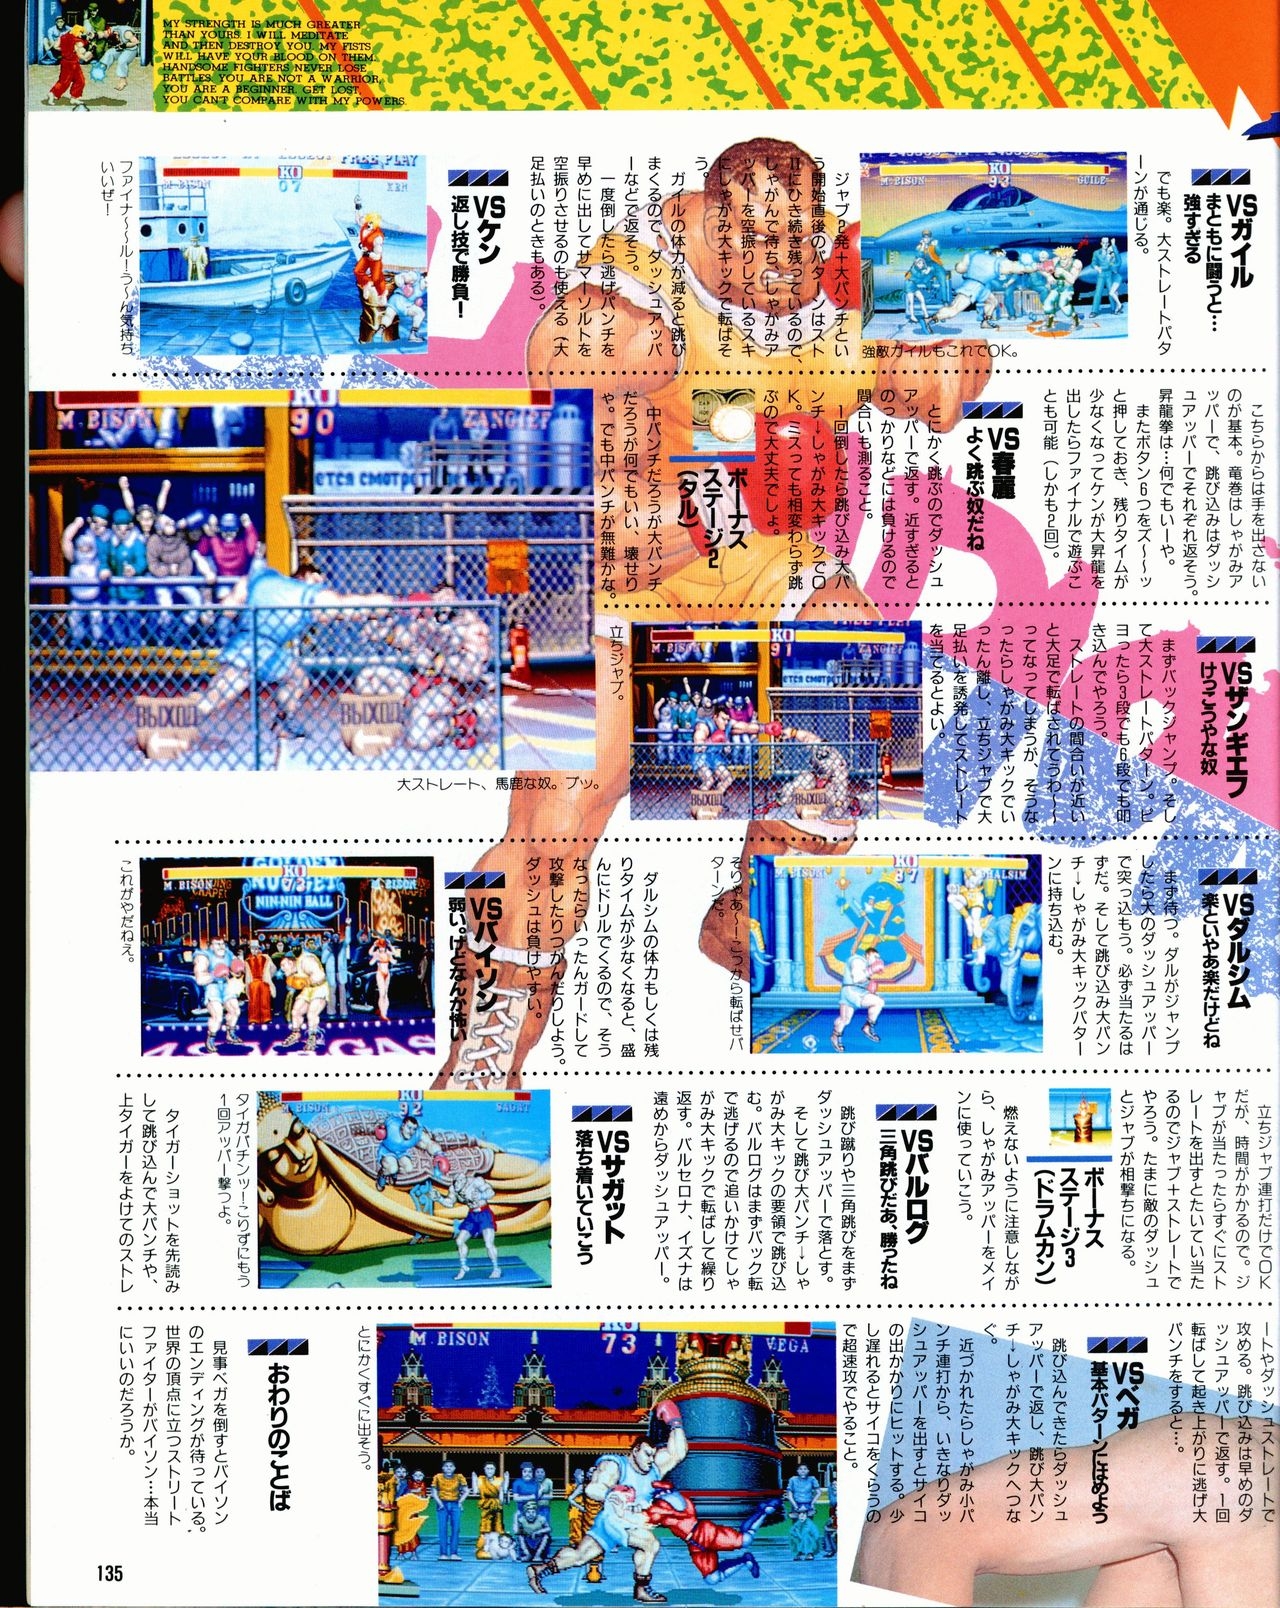 Street Fighter II Dash - Gamest special issue 77 136